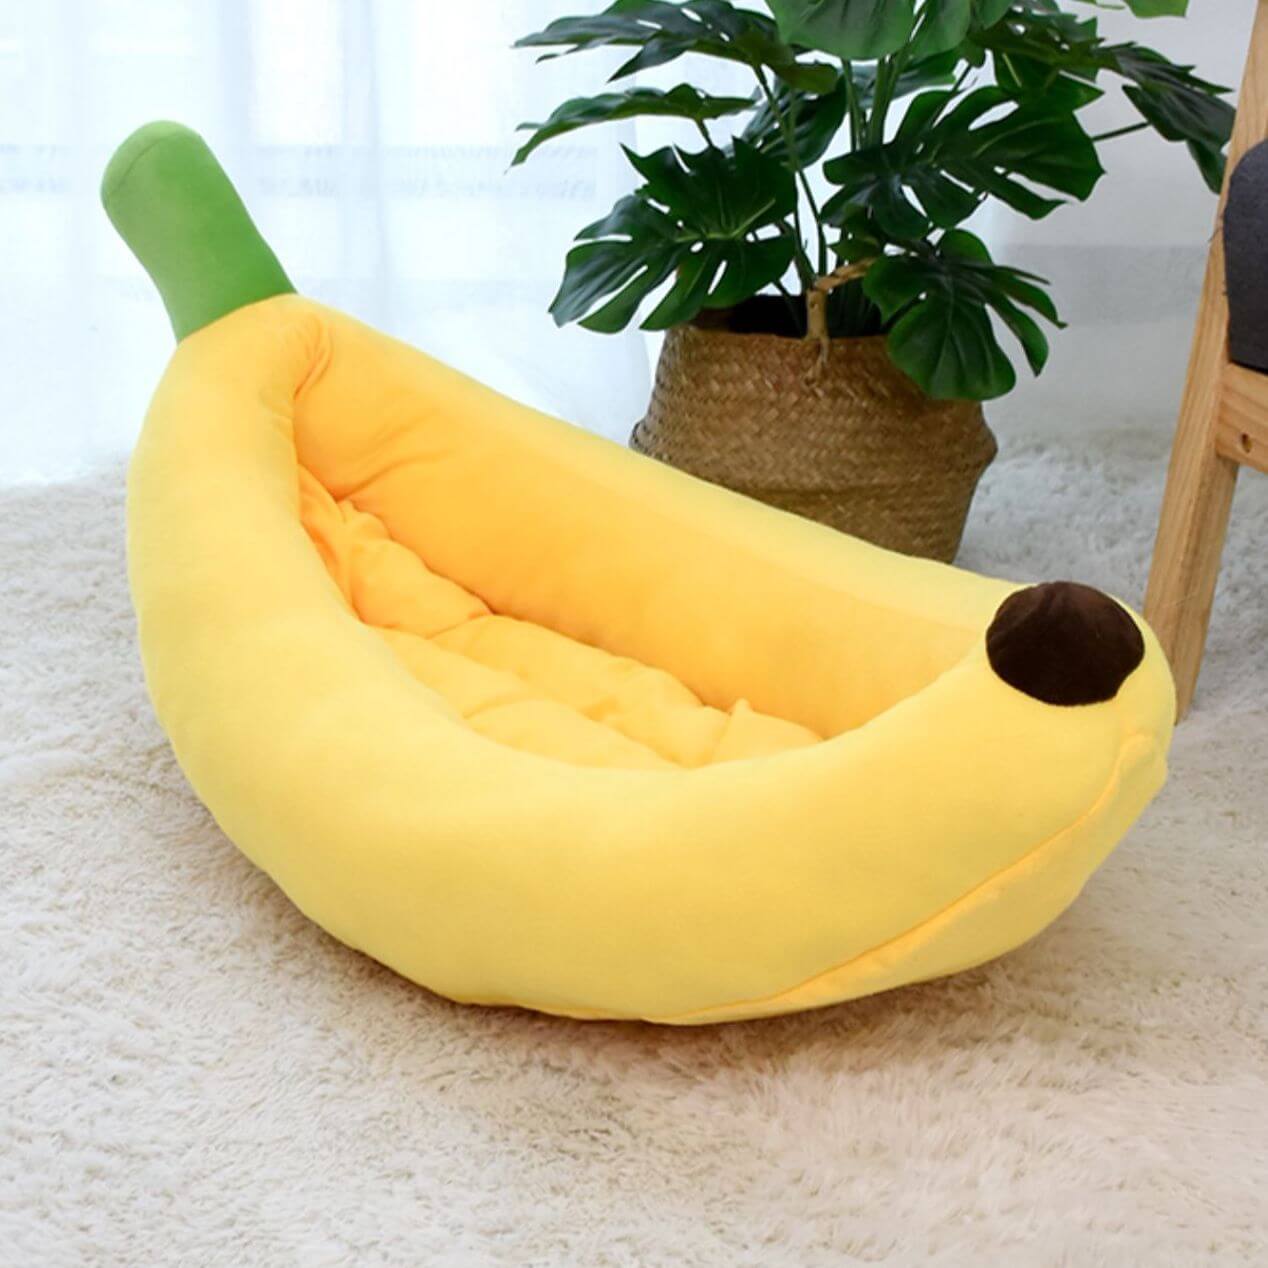 banana boat cat bed